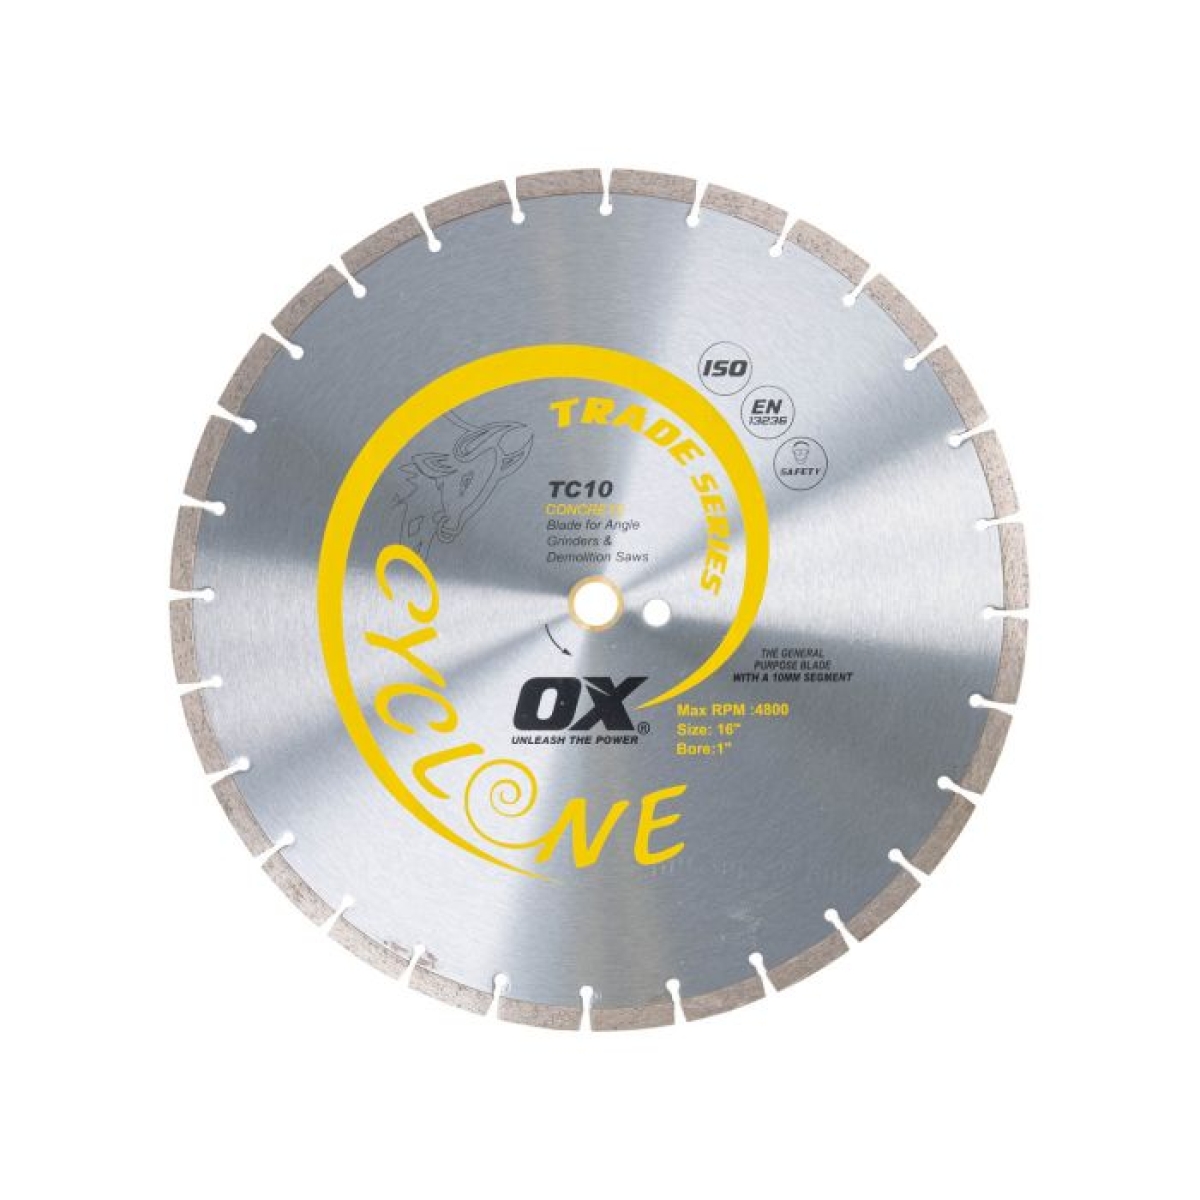 OX Concrete and General Purpose Diamond Blade